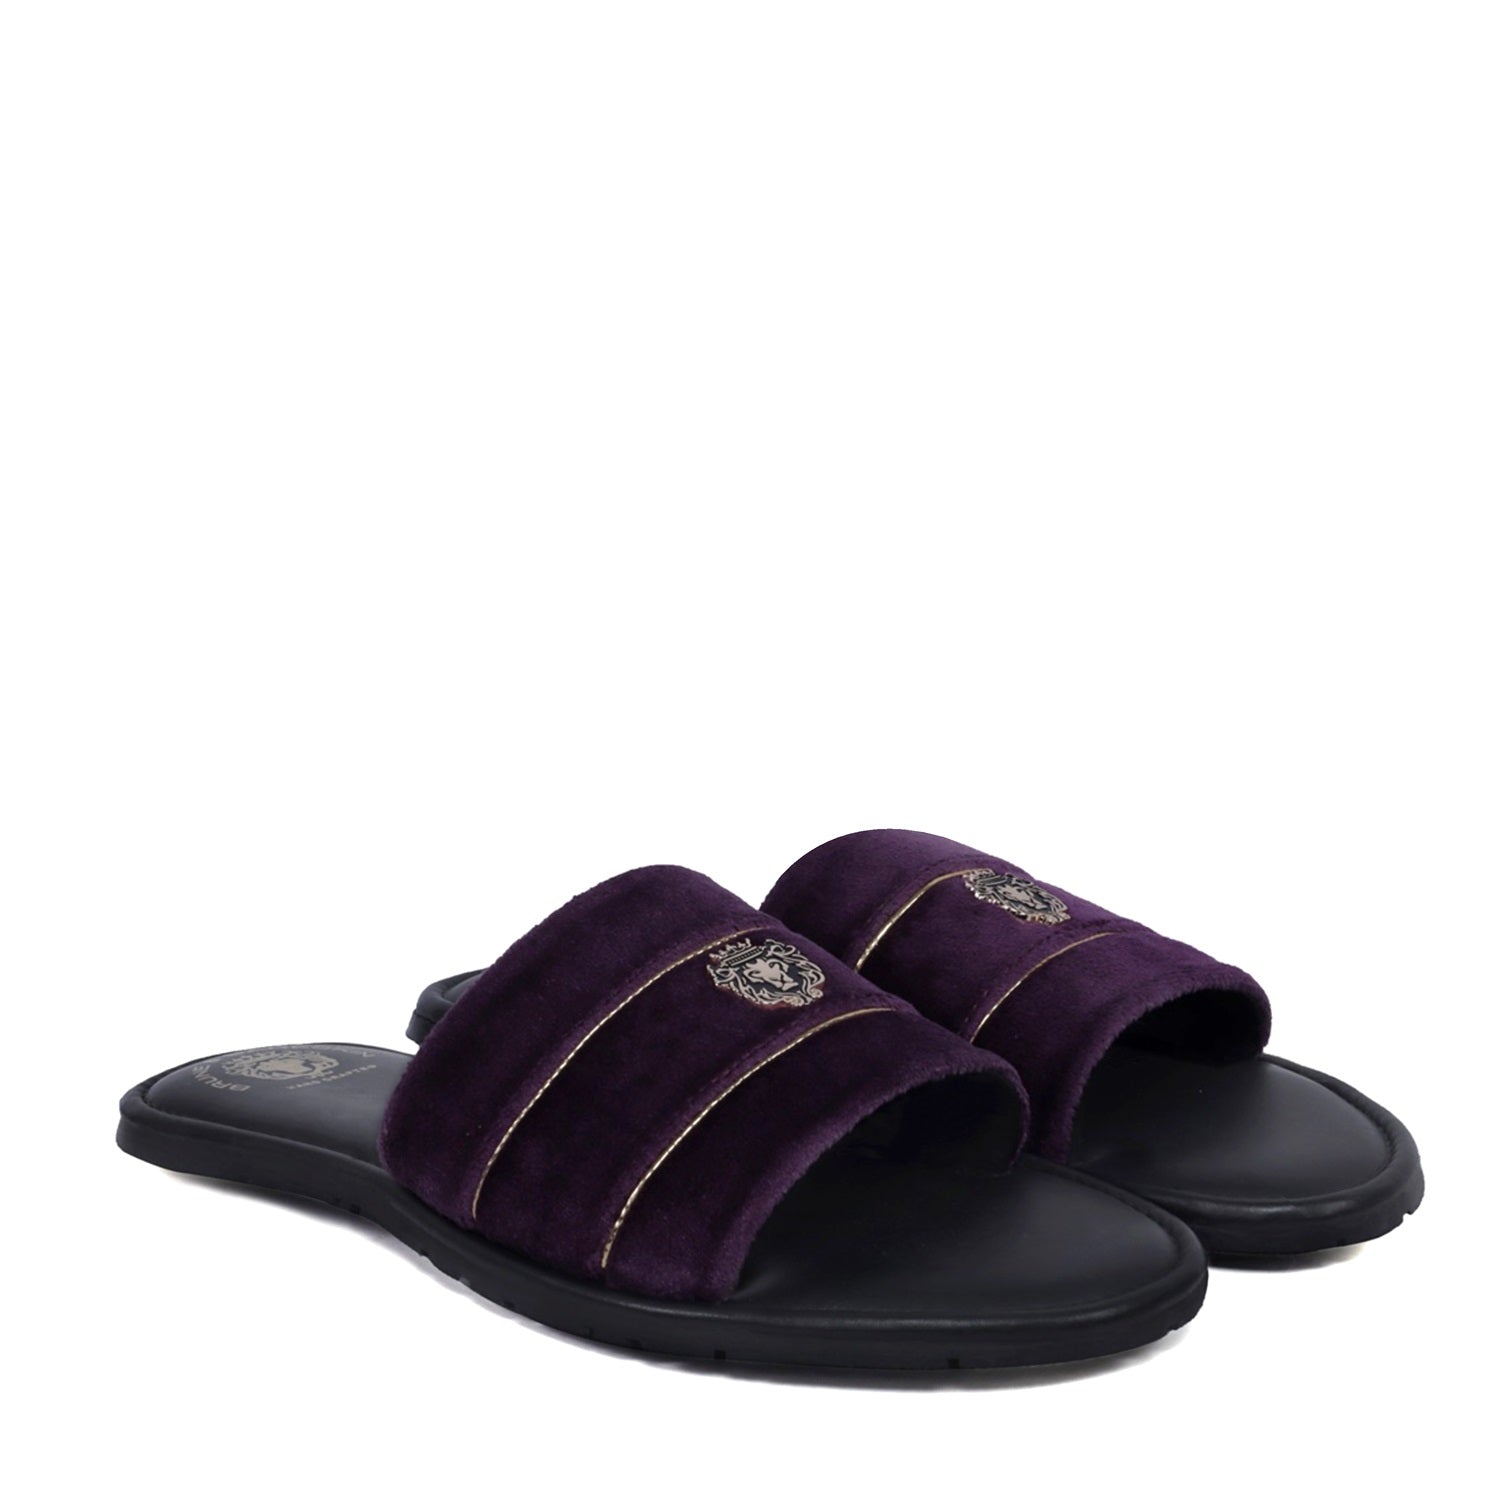 Purple Velvet Strap with Black Leather Comfy Base Slide-in Slippers by Brune & Bareskin